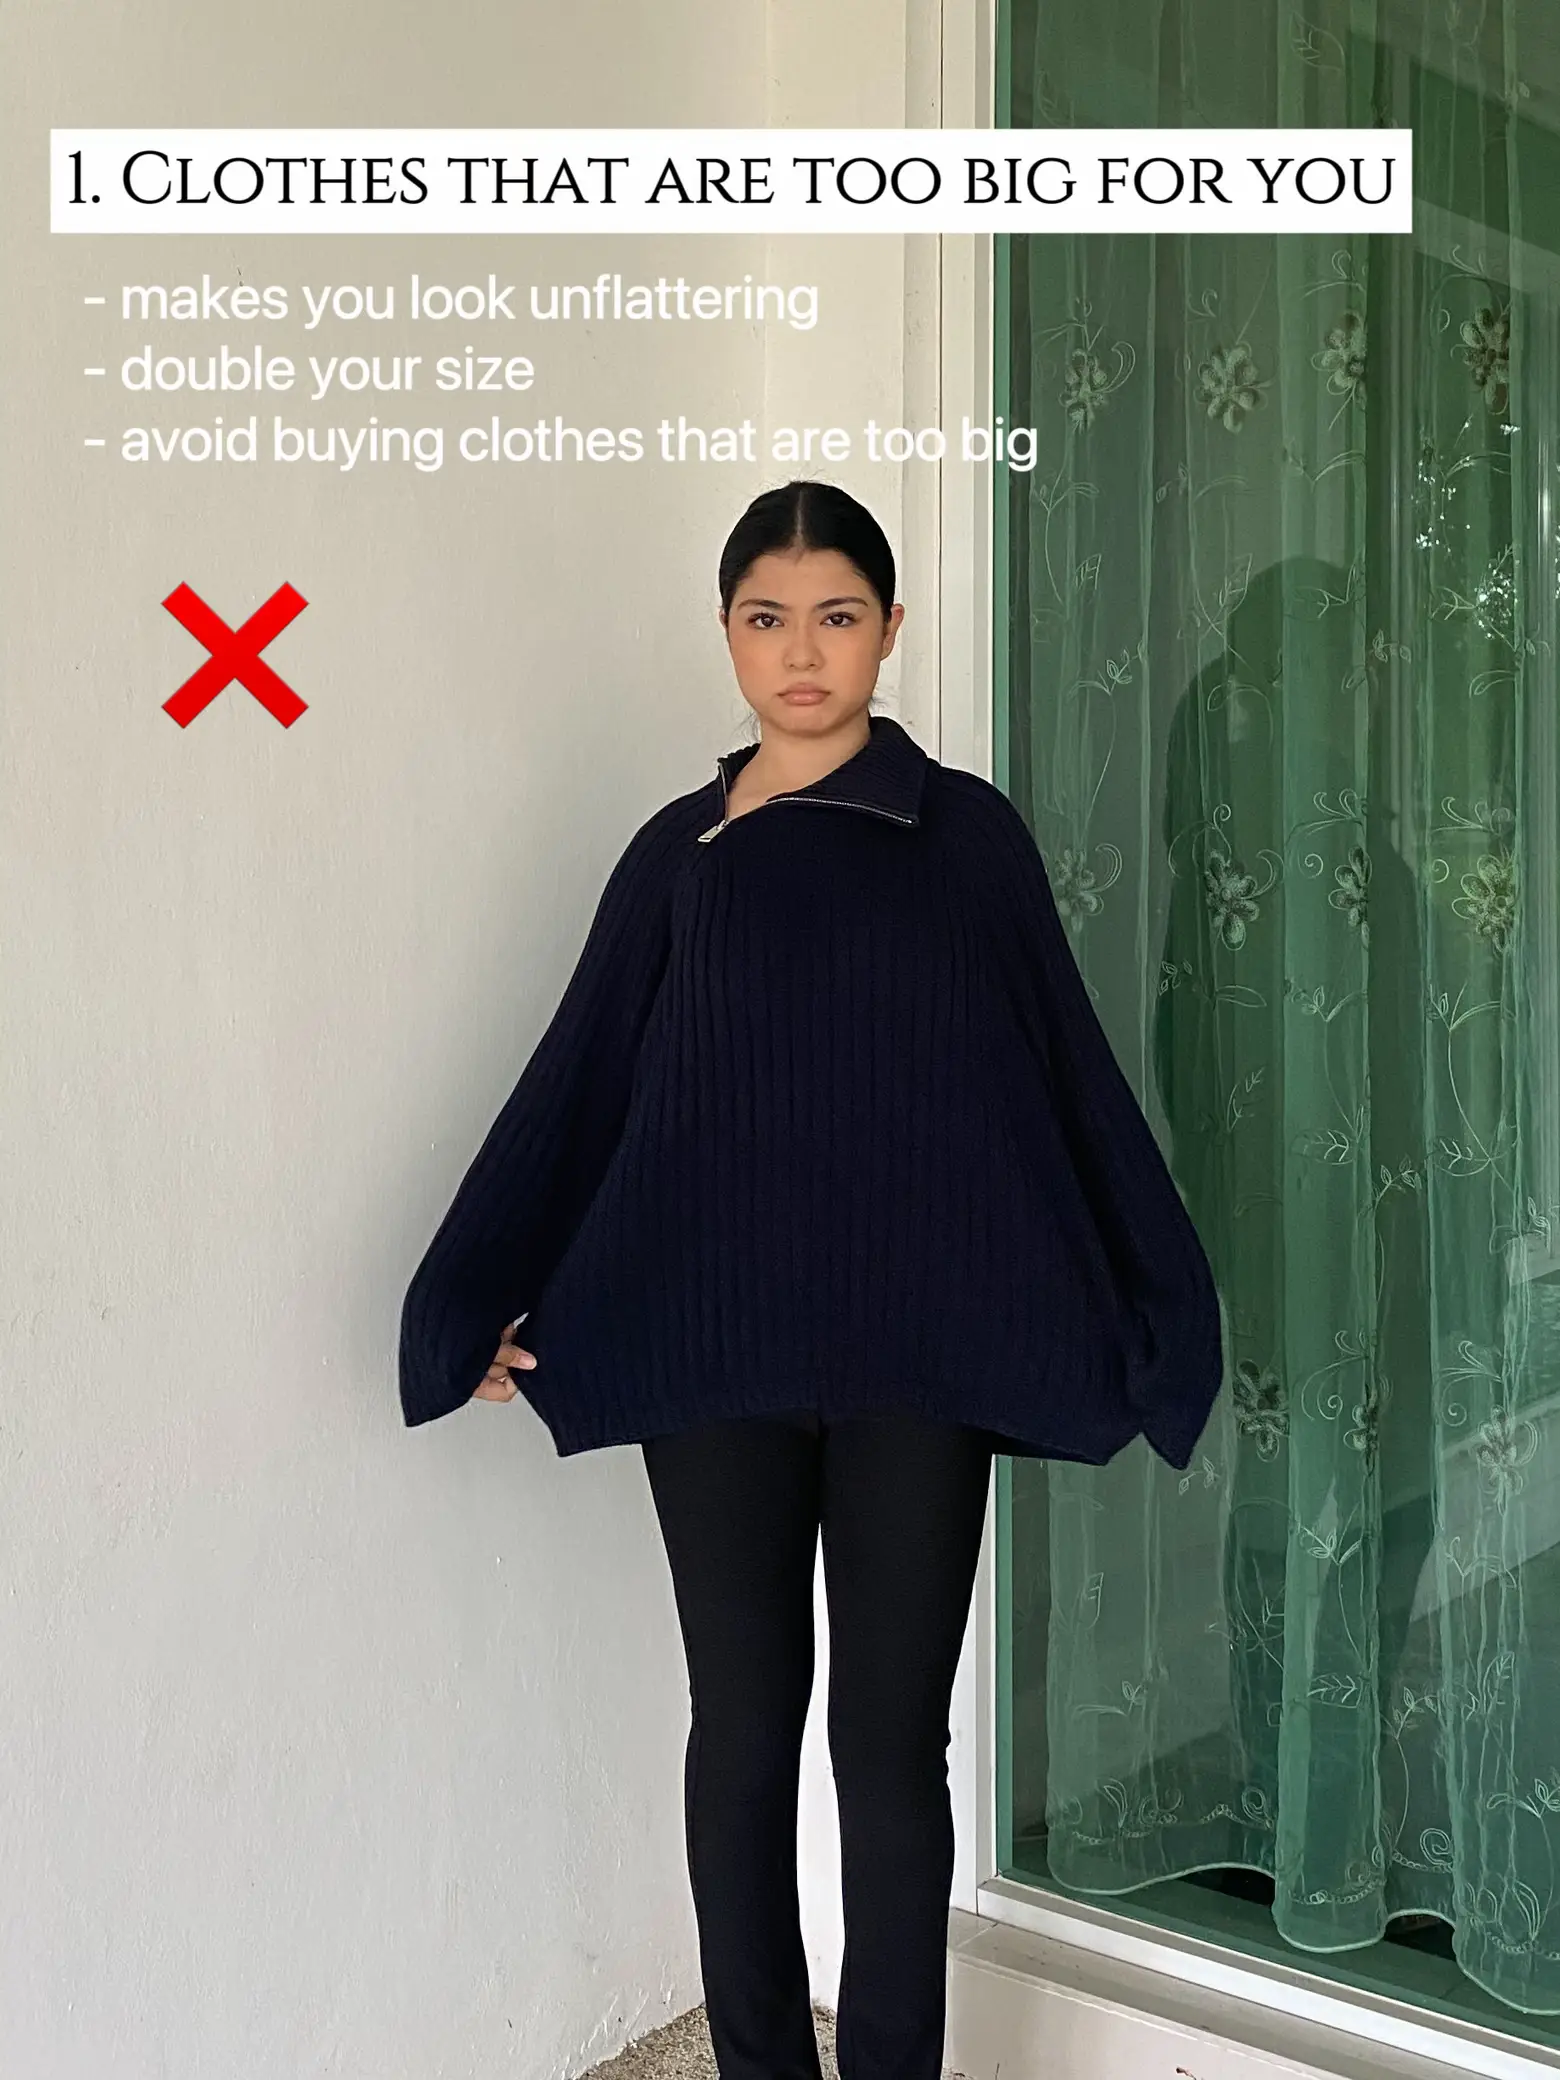 AVOID THESE CLOTHING TO LOOK UNSTYLISH!, Galeri disiarkan oleh Faznadia